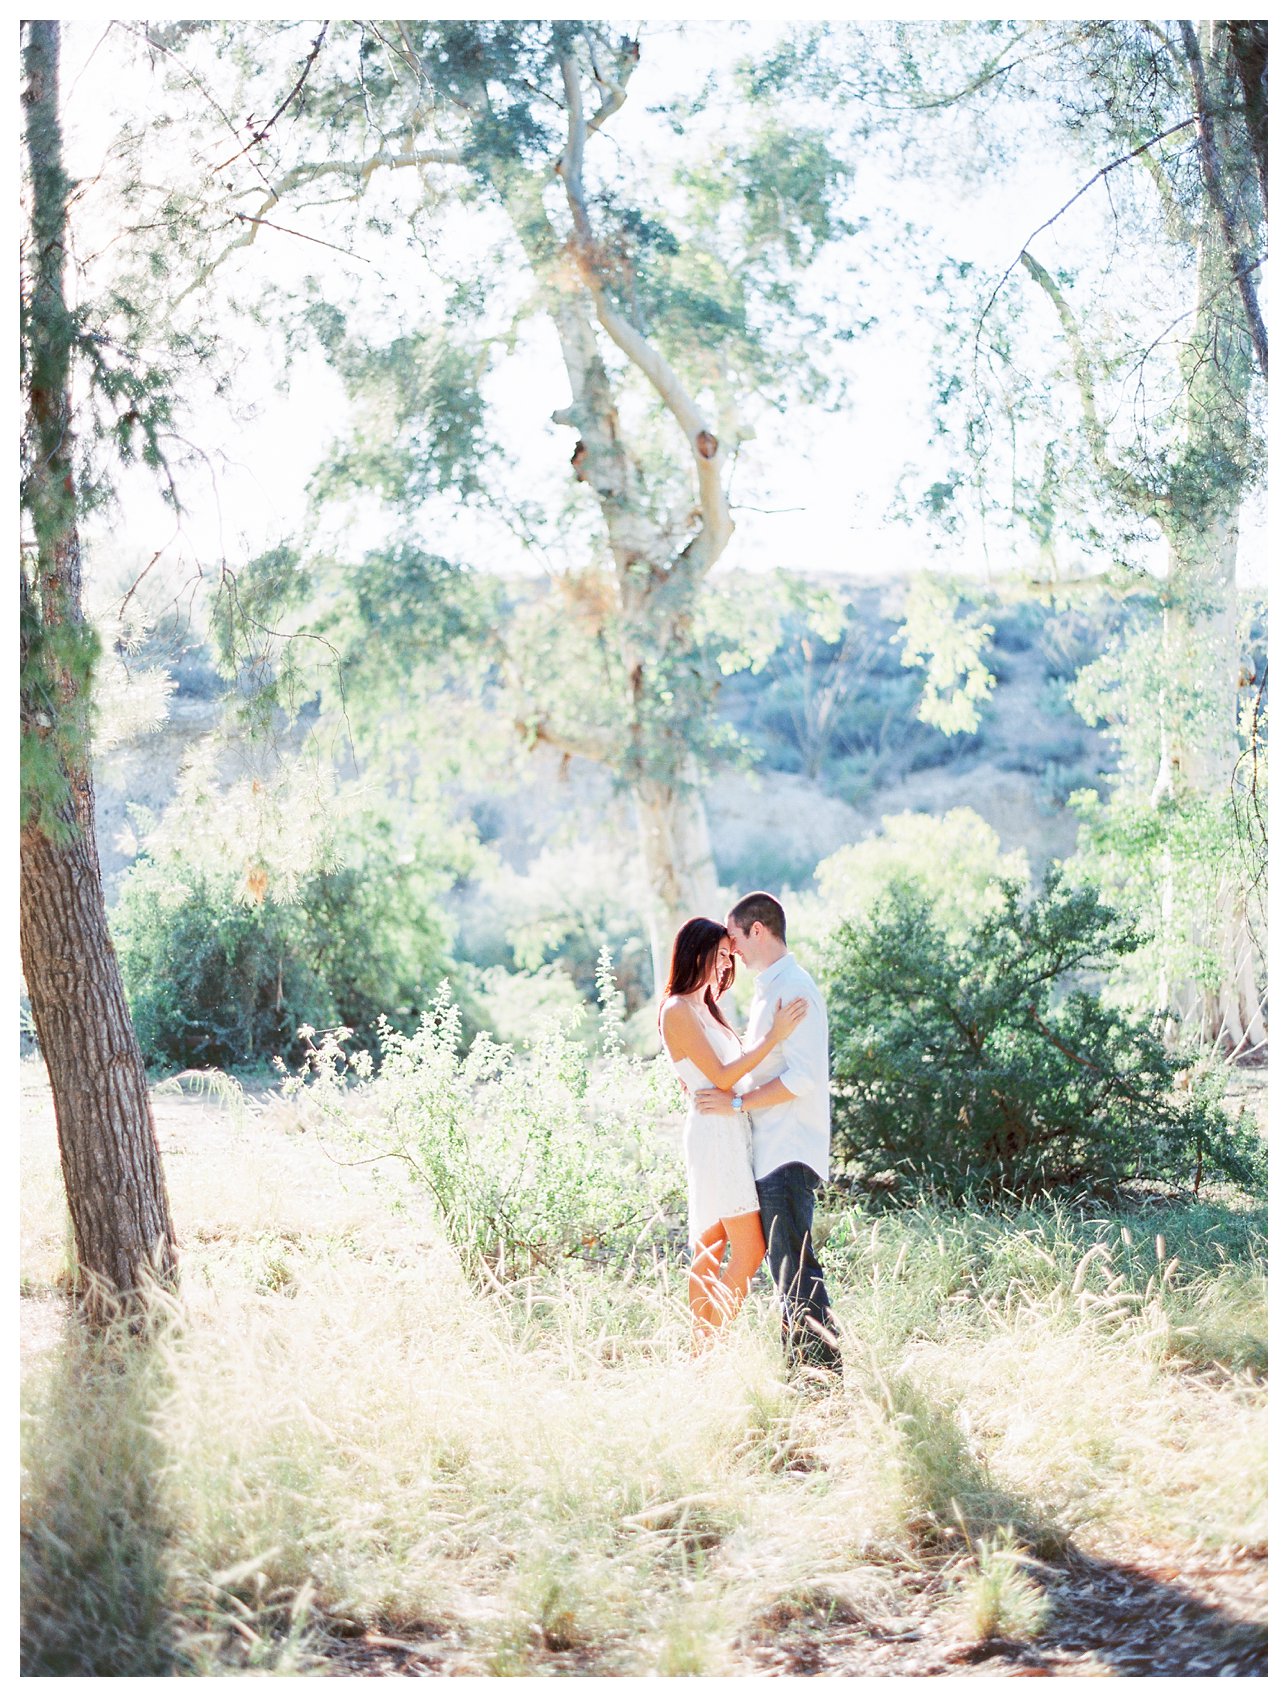 Boyce Thompson Arboretum engagement photos - Scottsdale Wedding Photographer | Rachel Solomon Photography_4700